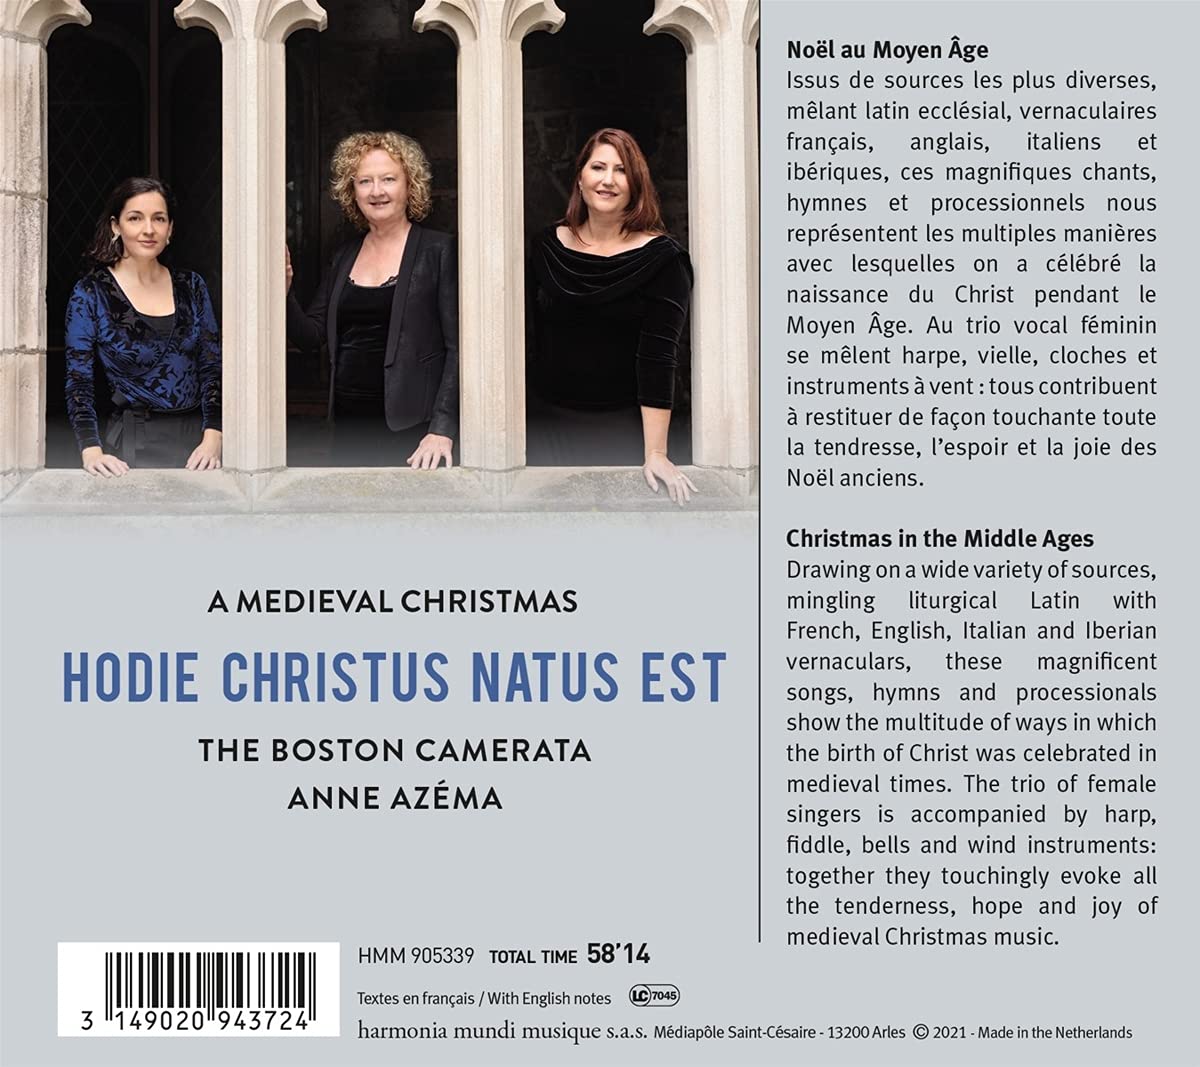 Anne Azema 중세 크리스마스 음악 - 오늘 그리스도께서 태어나셨도다 (Hodie Christus natus est - A Medieval Christmas)